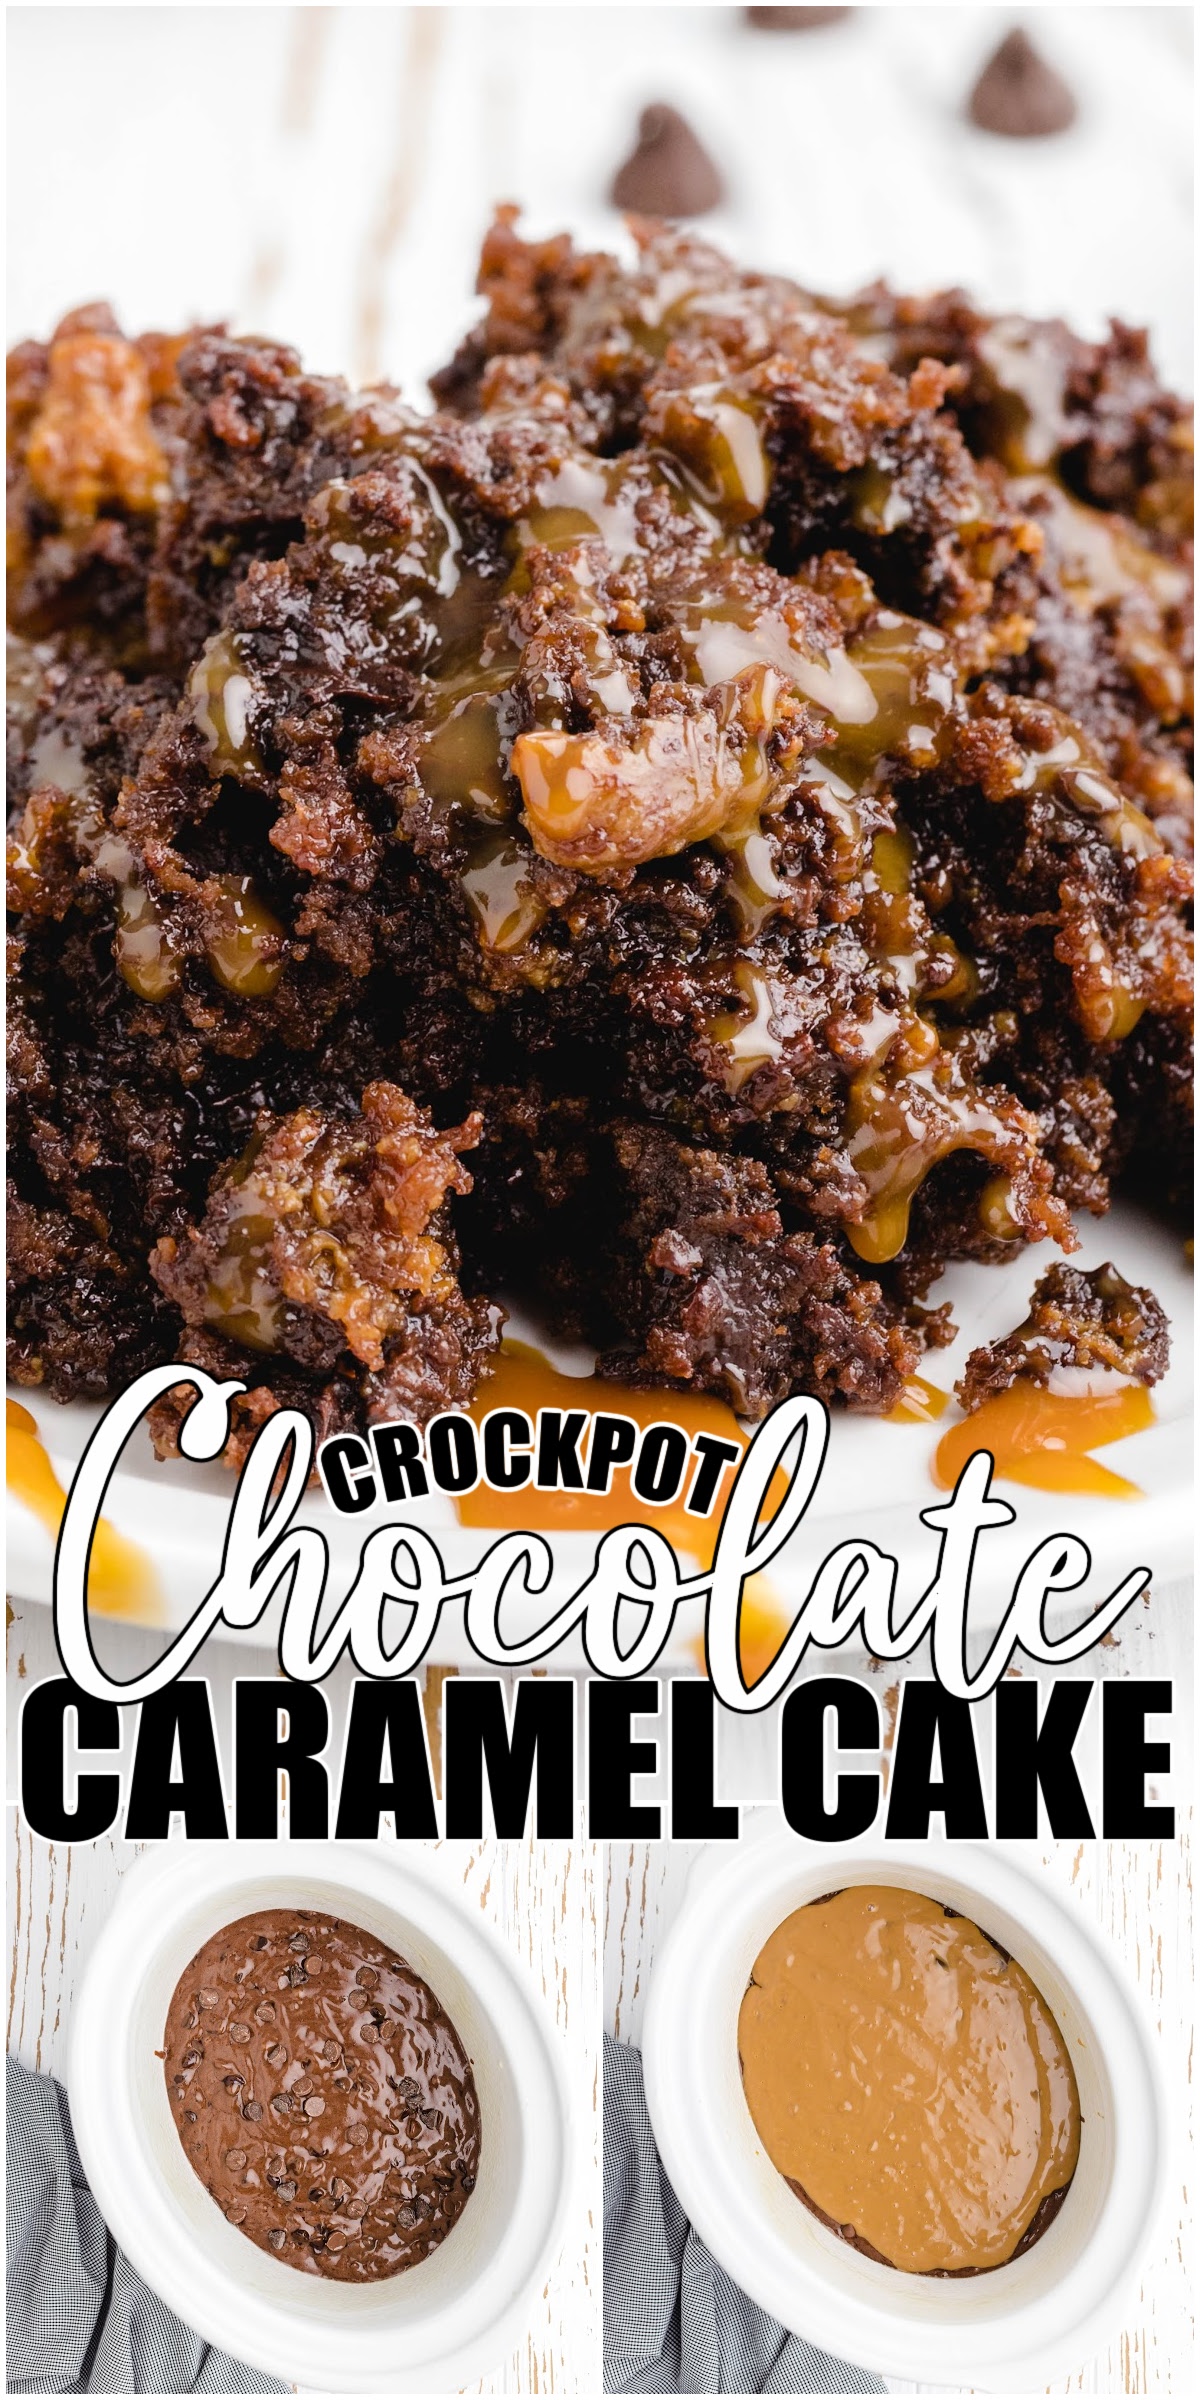 Crockpot Chocolate Caramel Cake - The Best Blog Recipes